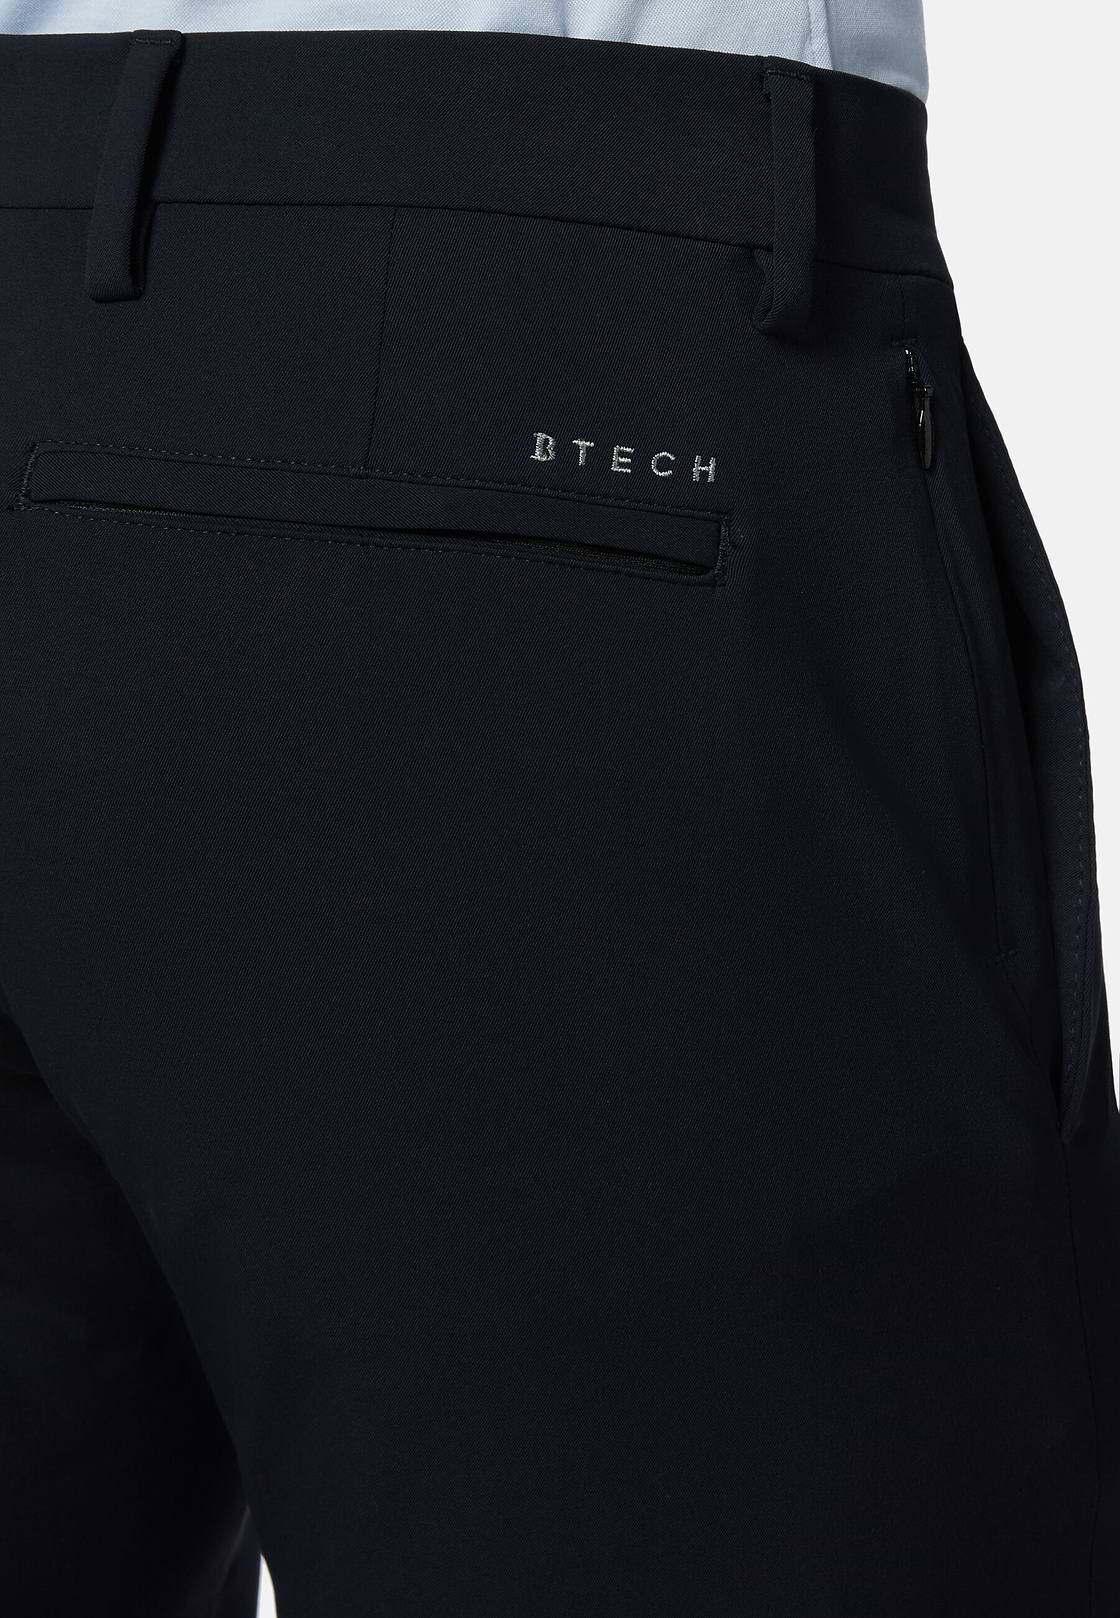 BTech Performance Stretch Nylon Pants, Navy blue, hi-res